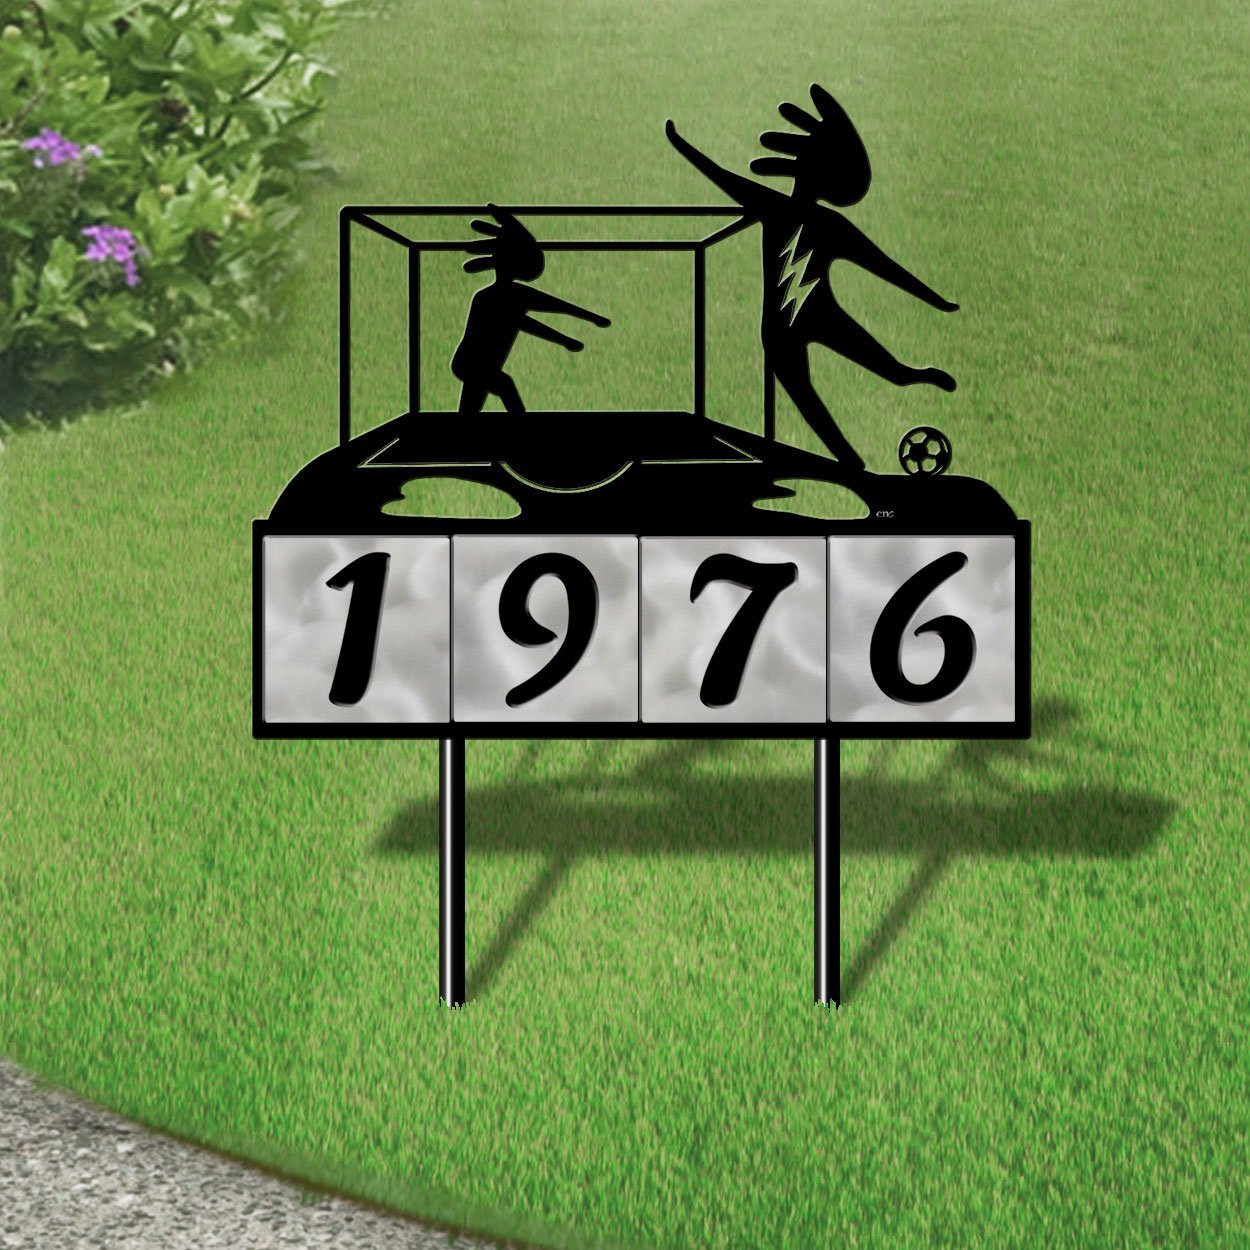 610194 - Kokopelli Soccer 2 4-Digit Horizontal 6in Tiles Yard Sign